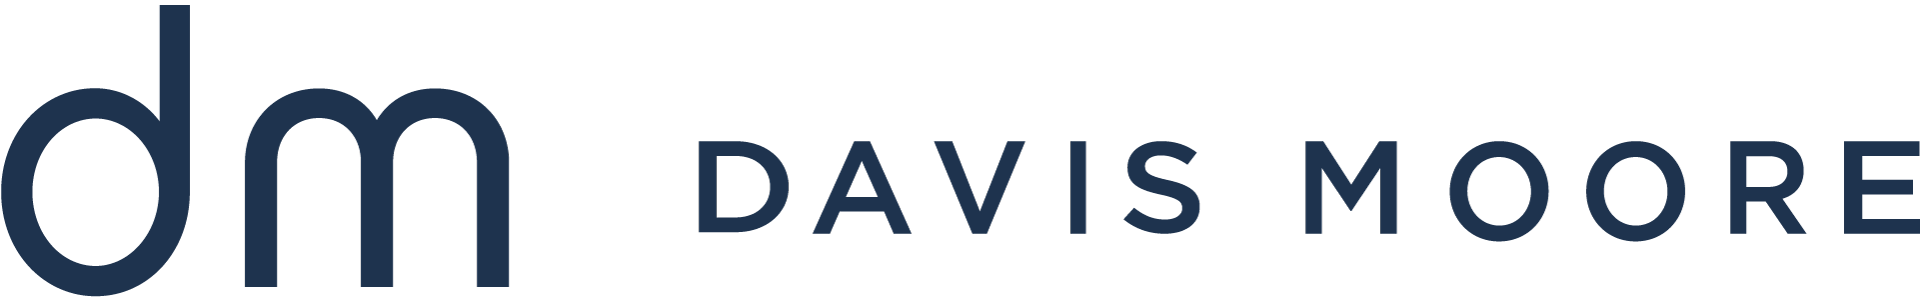 Davis Moore logo